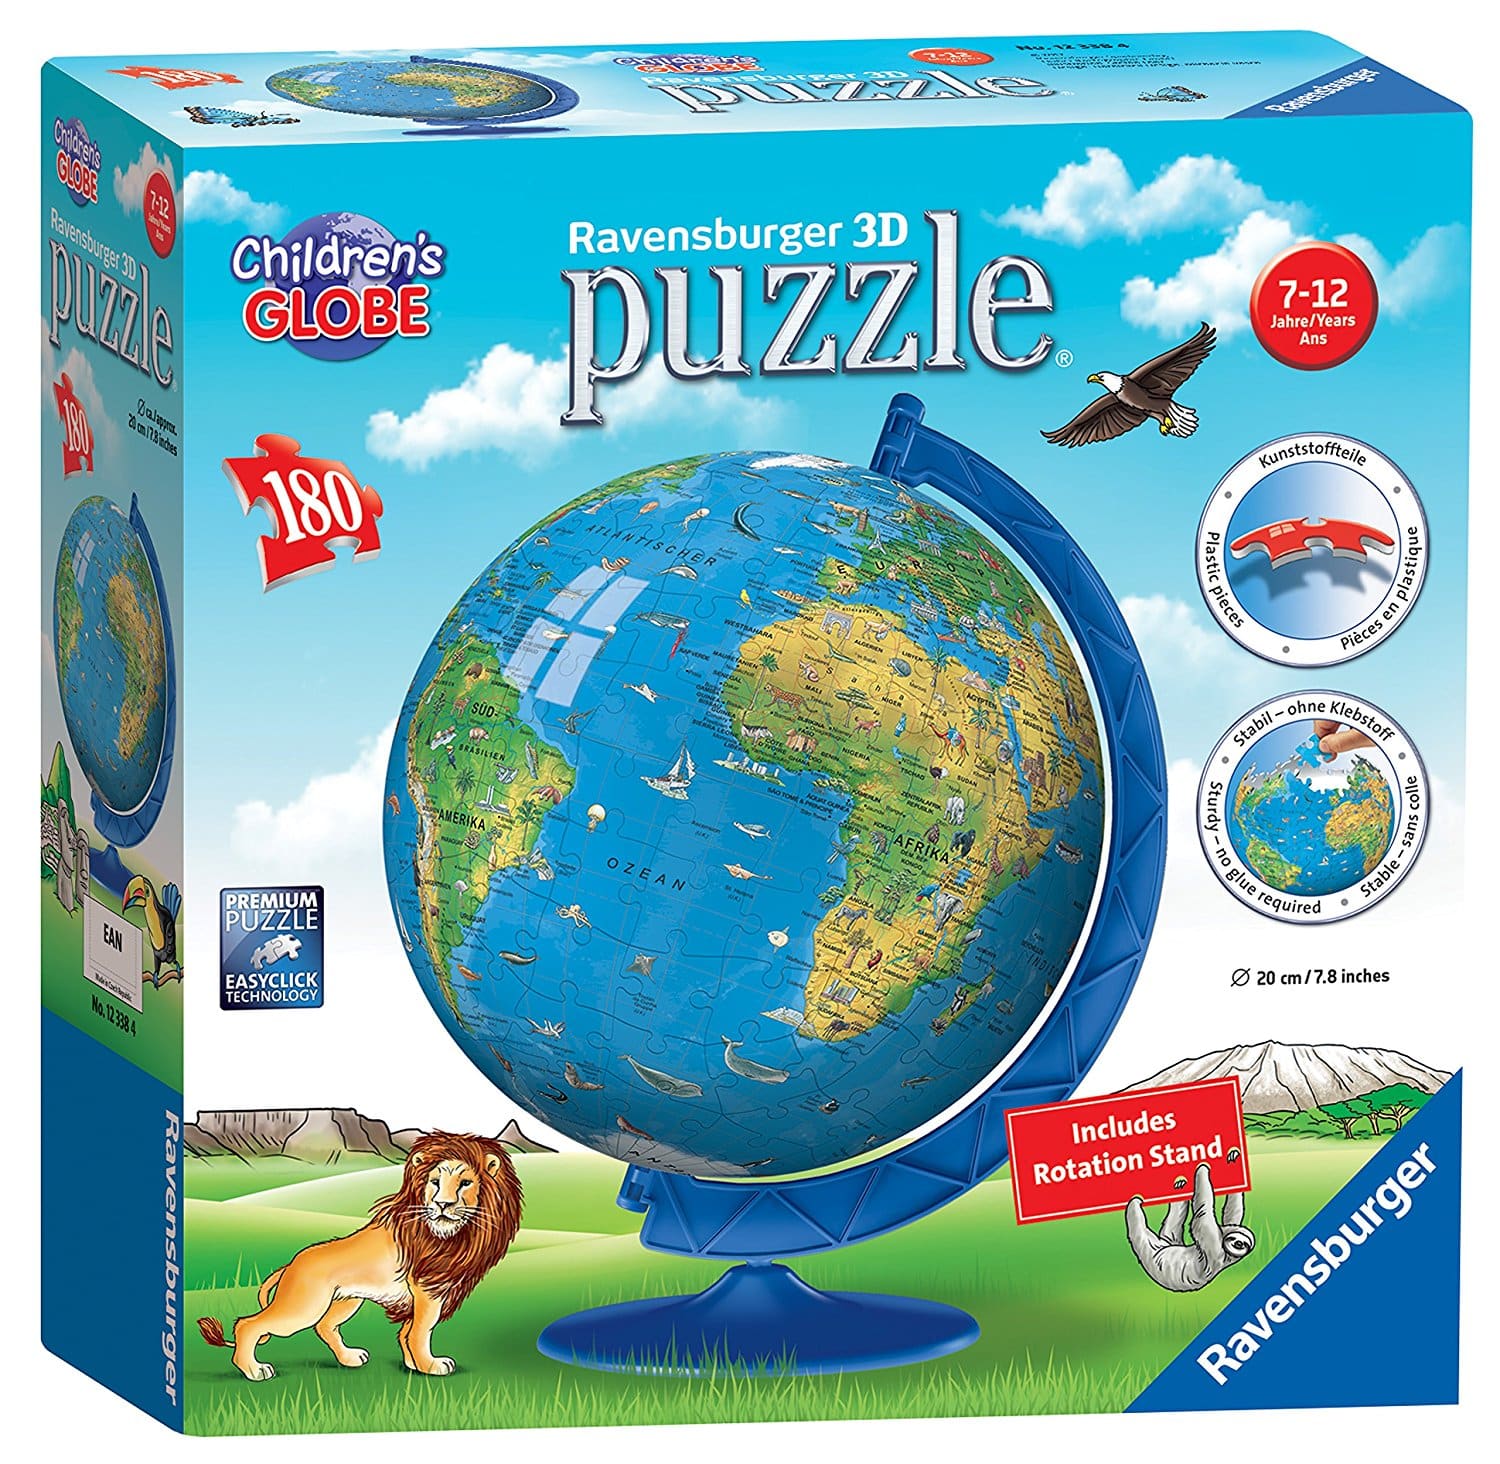 DEAL ALERT: Children’s World Globe 3D Puzzle (180 pc) – 43% off!